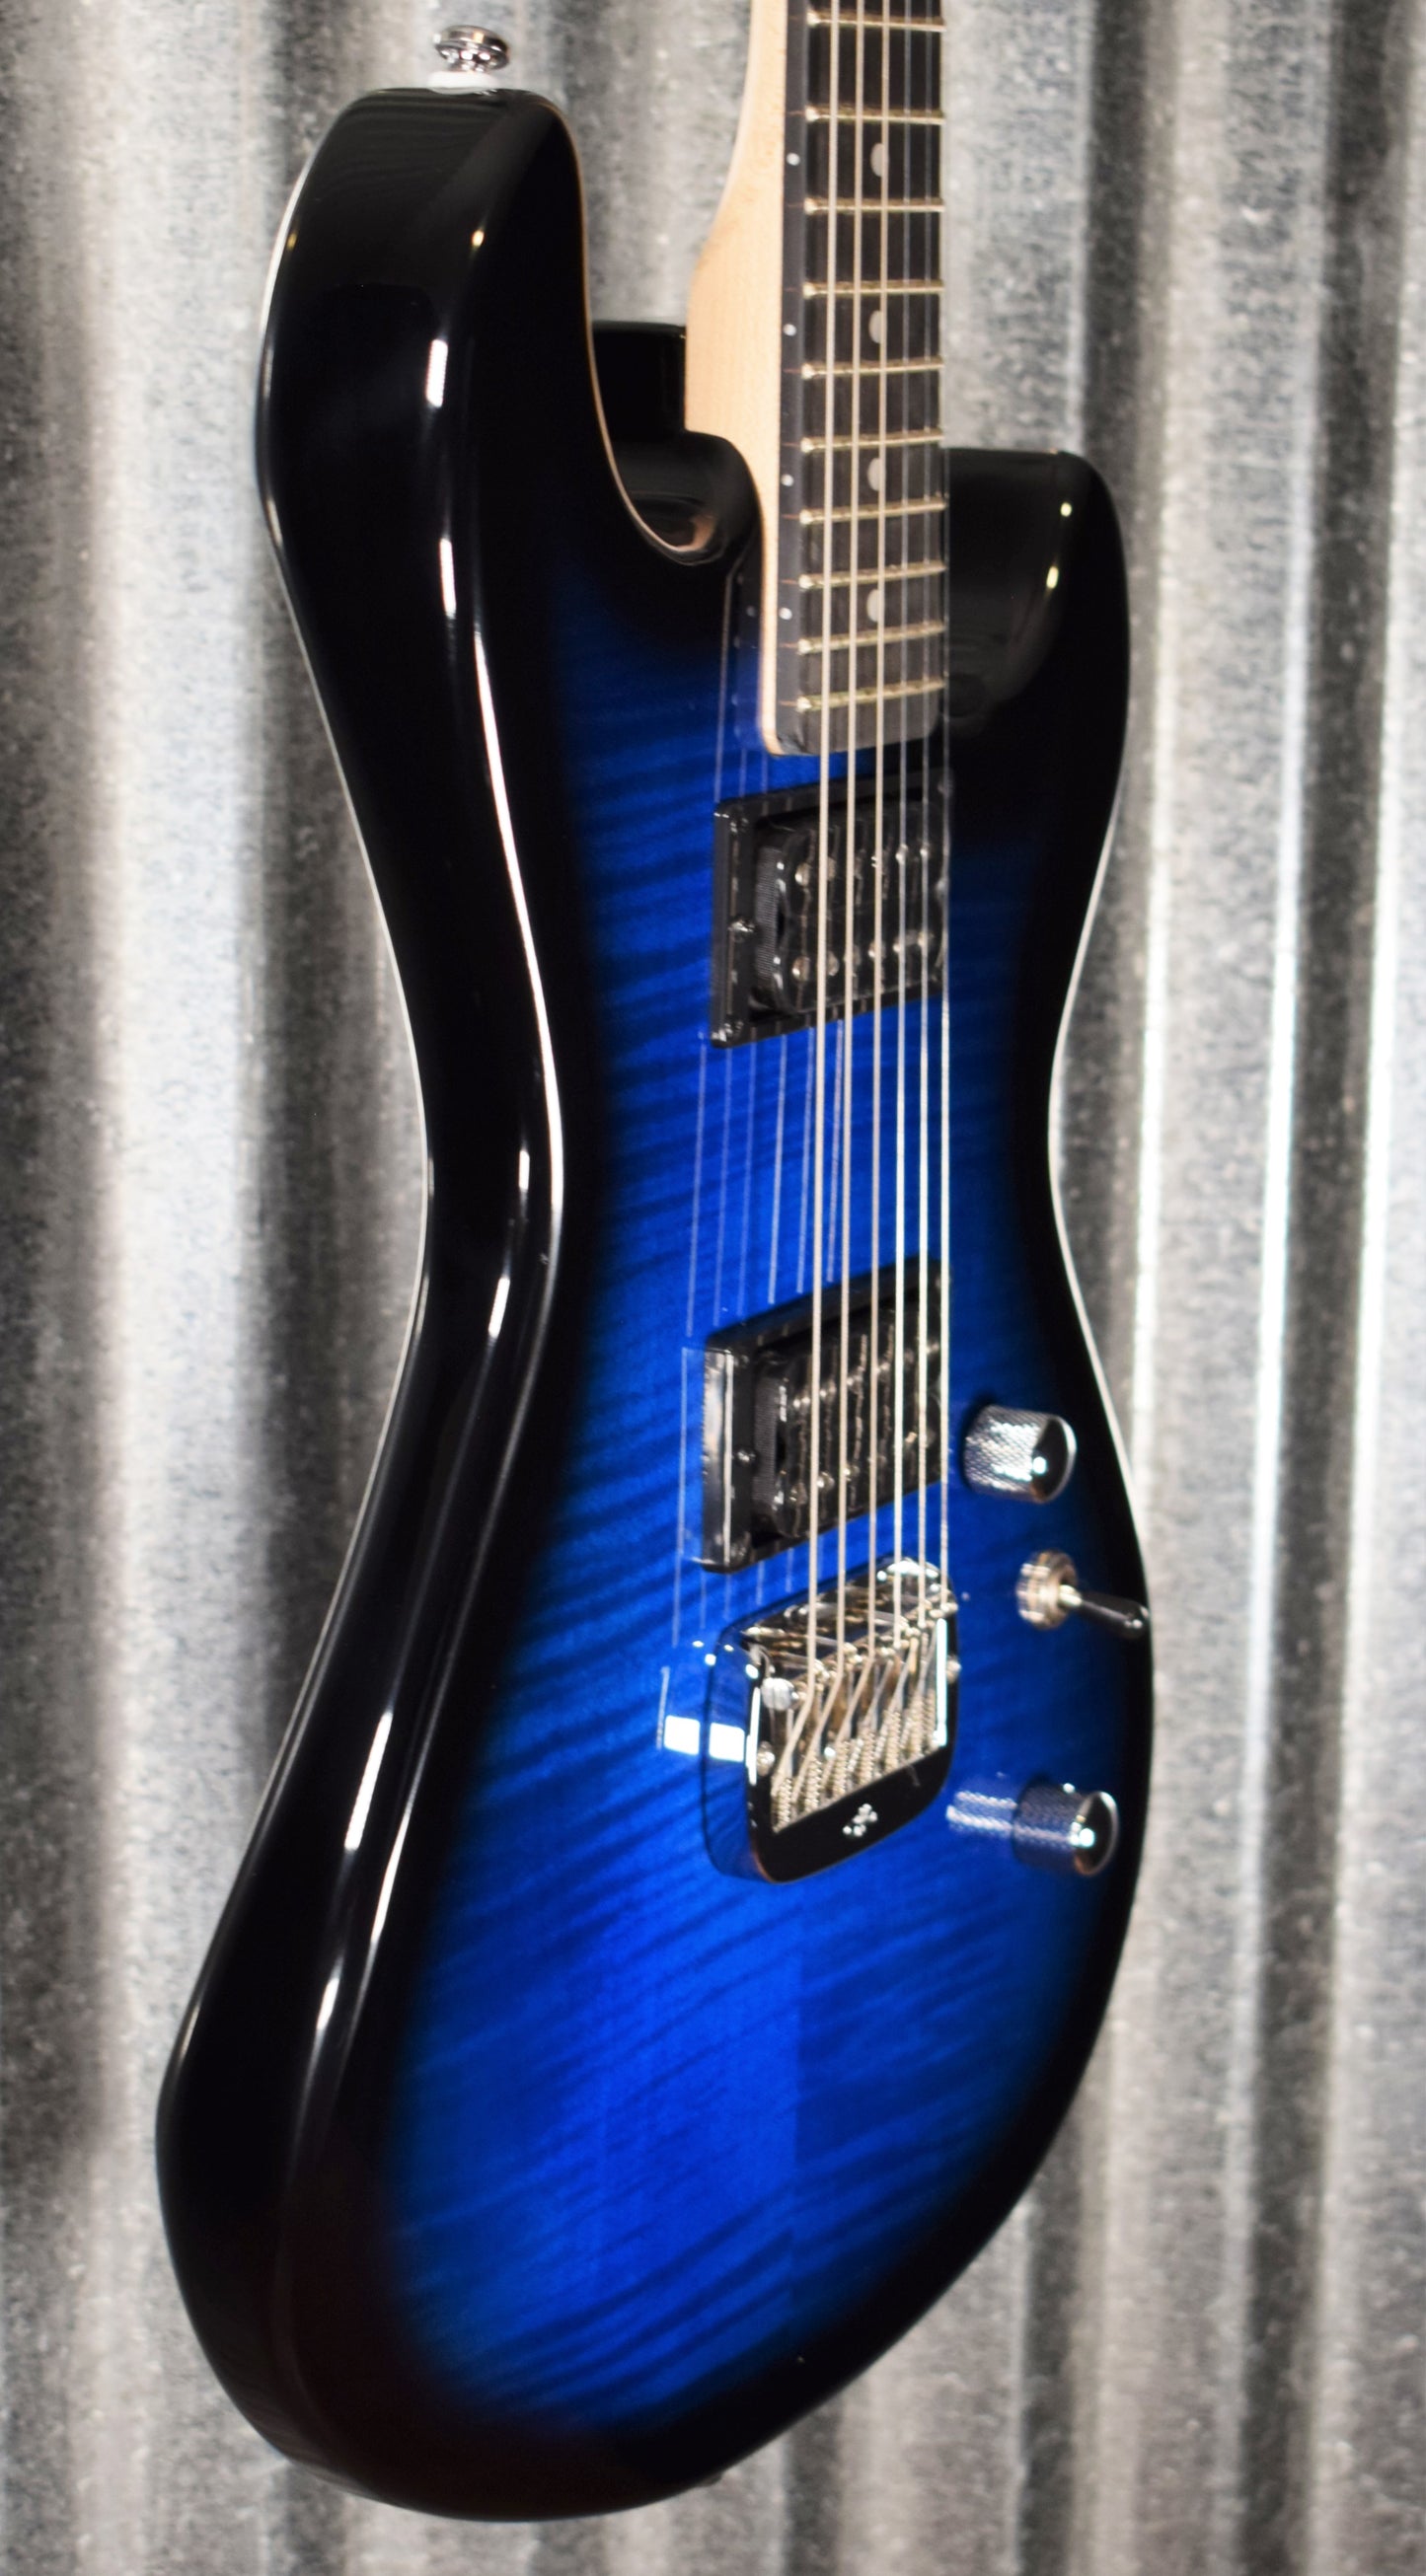 G&L Tribute Jerry Cantrell Superhawk Blue Burst Guitar #3270 Demo